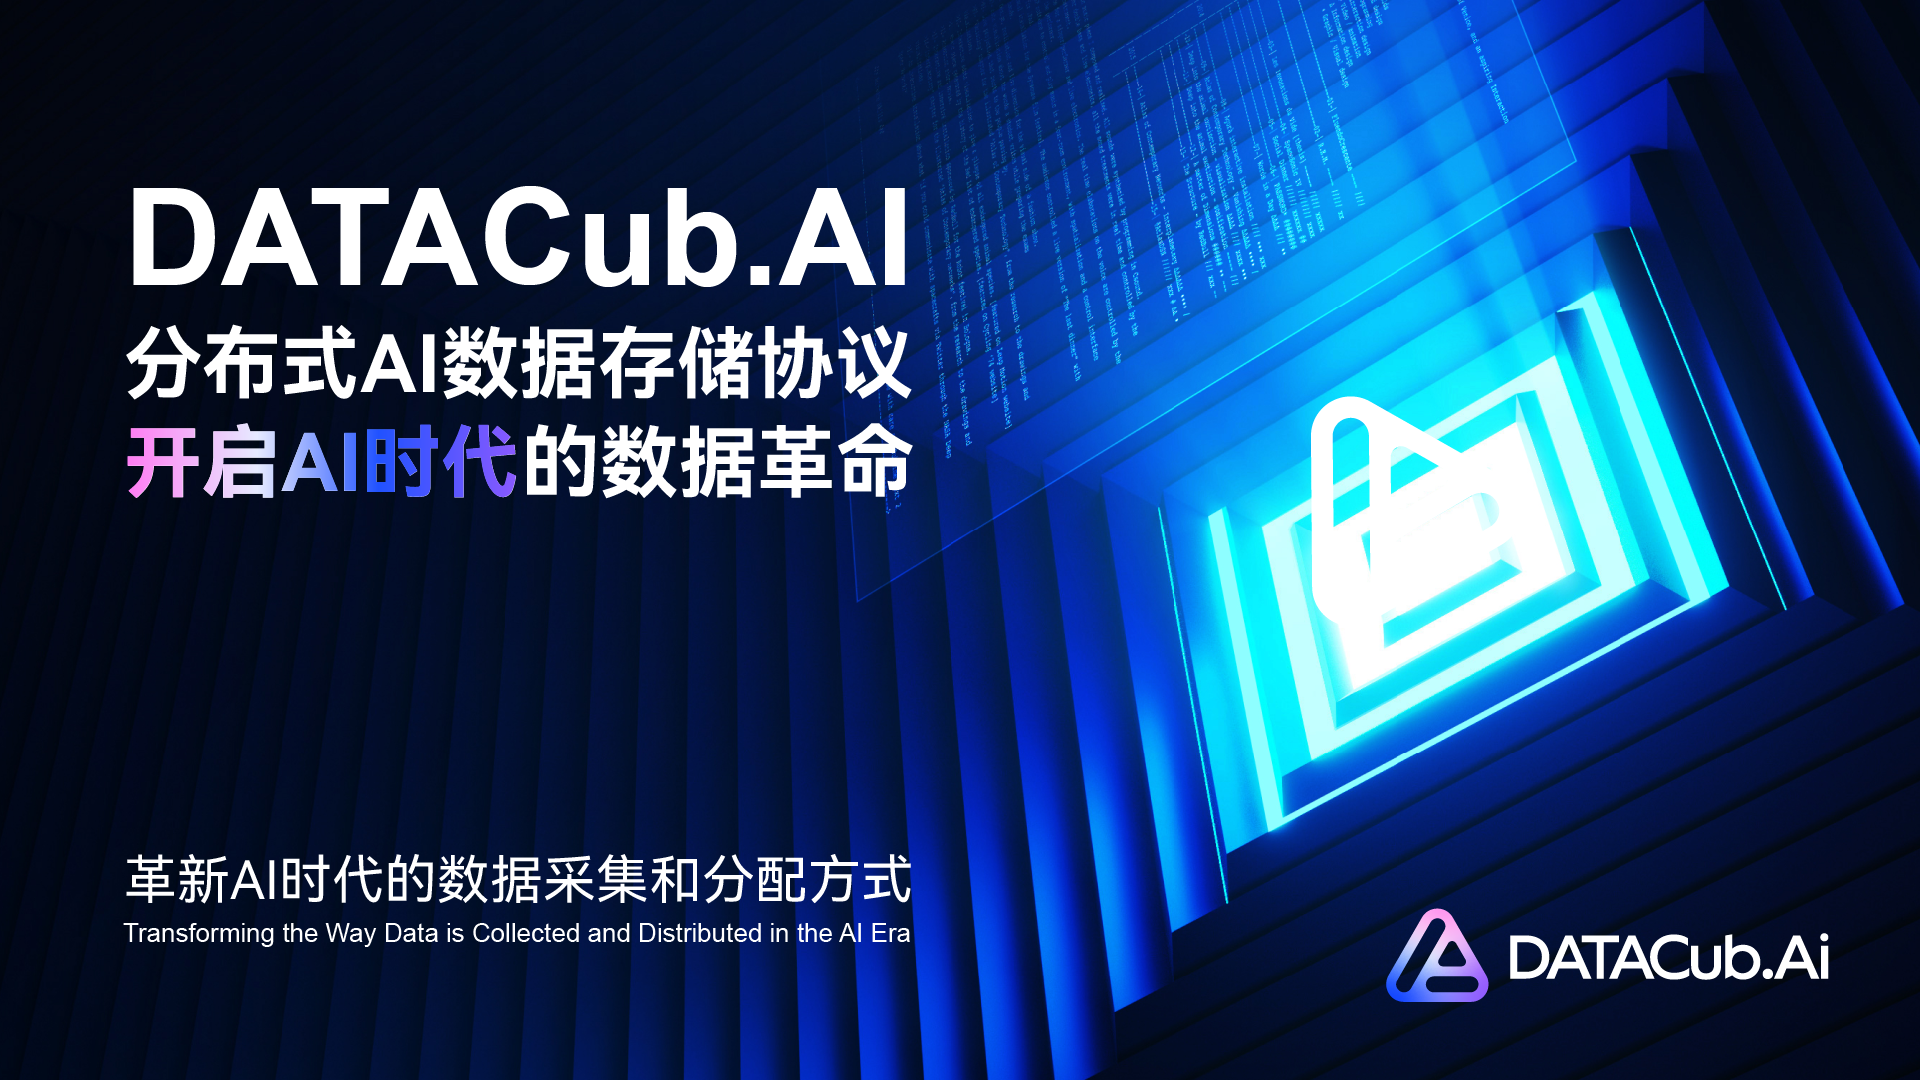 DATACub.AI 4月13日全球上线！以AI创新技术彻底革新传统数据供给方式